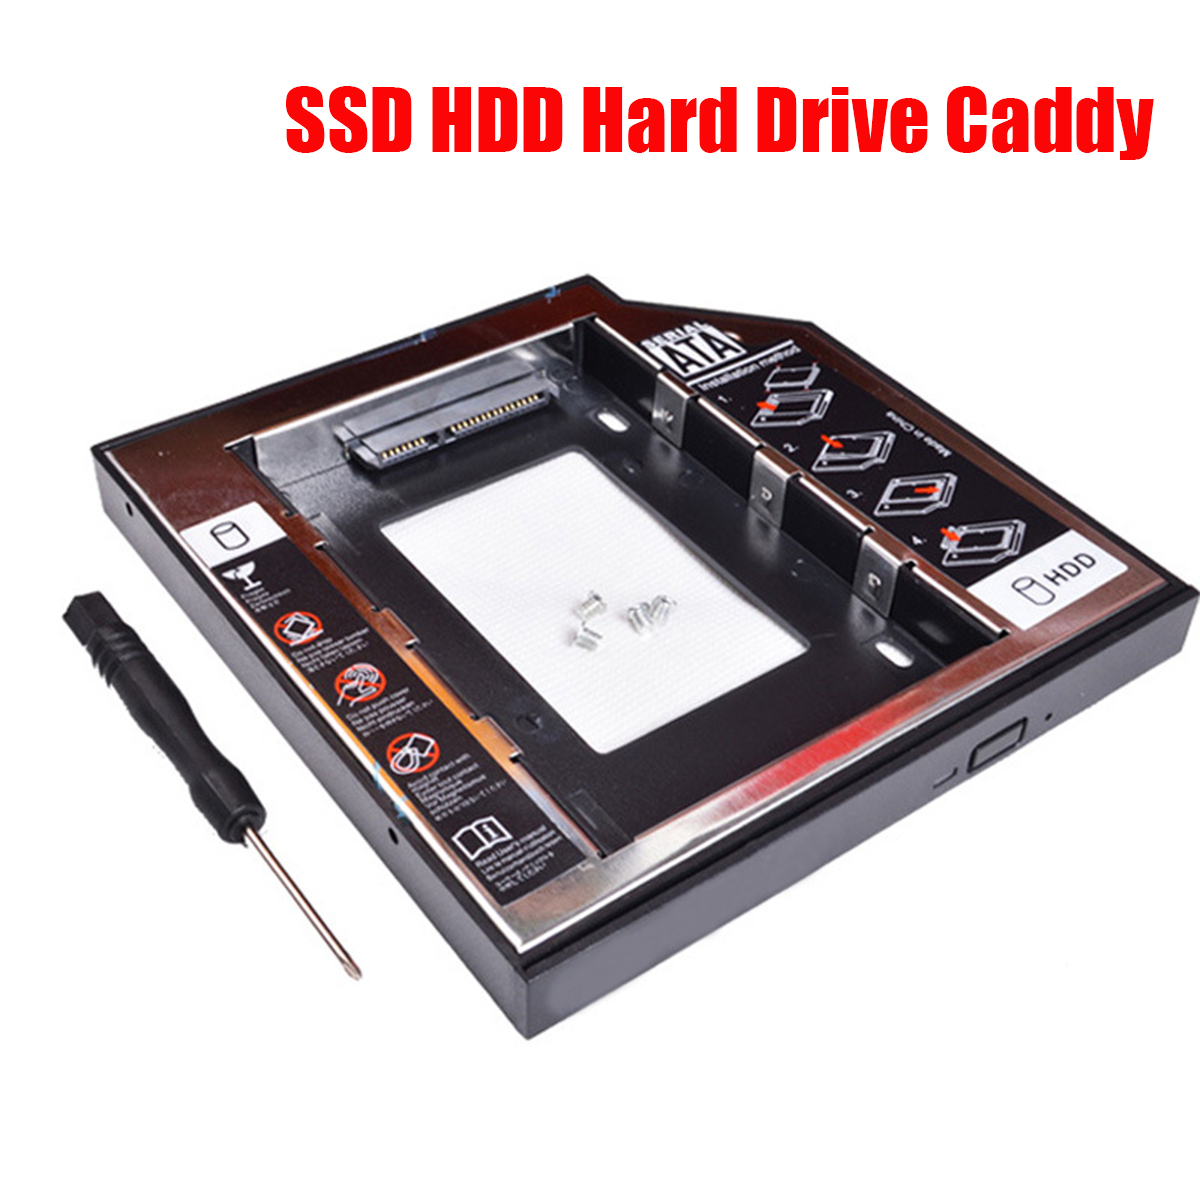 2nd HDD SSD Hard Drive Caddy for IBM Lenovo Thinkpad T430 T430i W530 T530 T530i 17